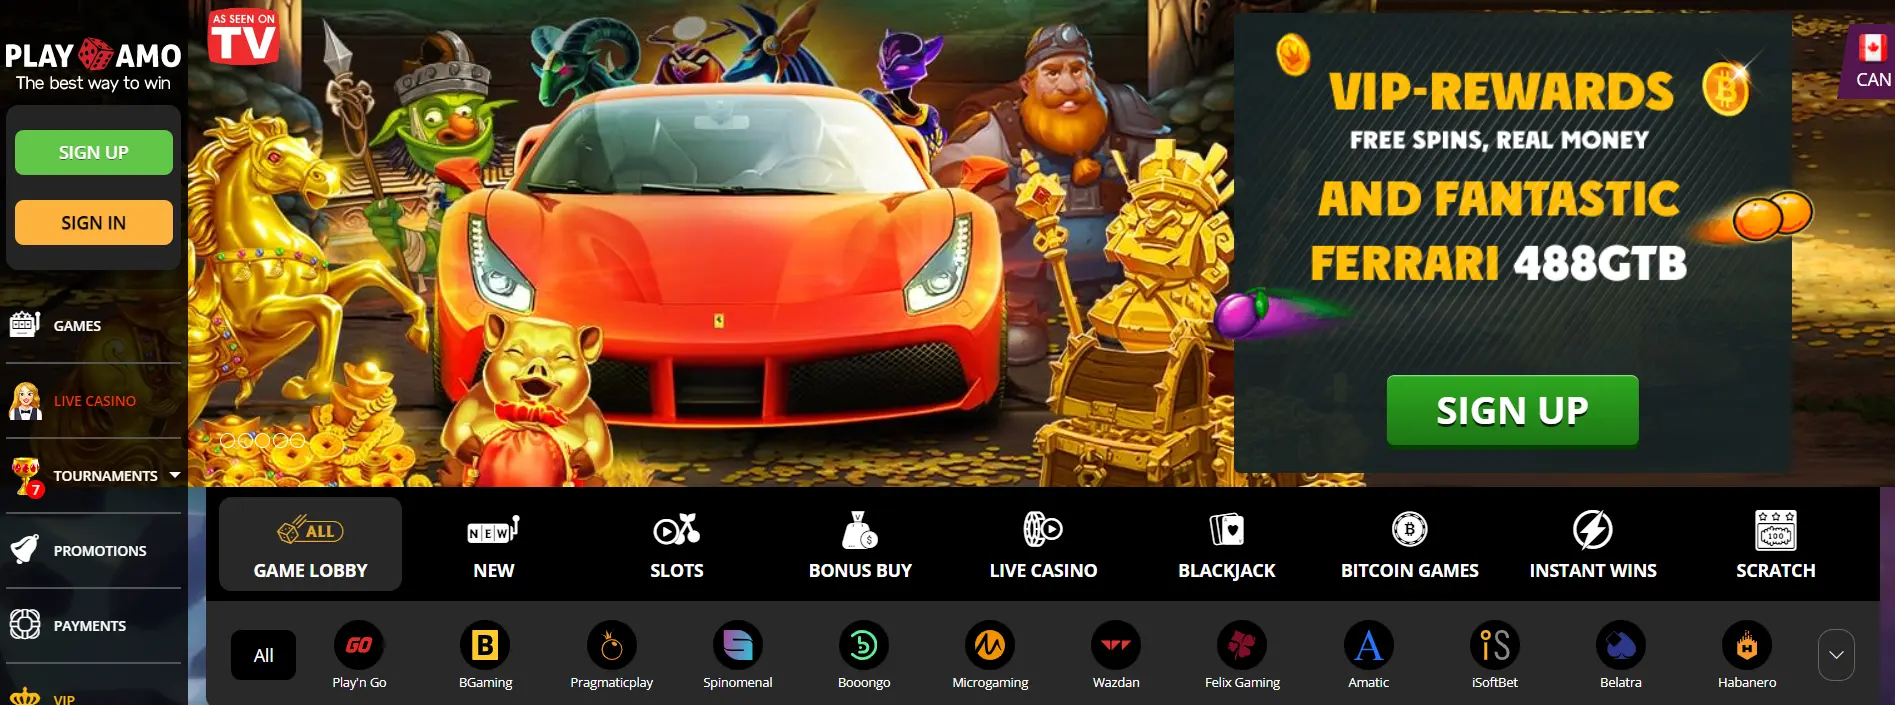 Screenshot of Play Amo Official Website - New Online Casino